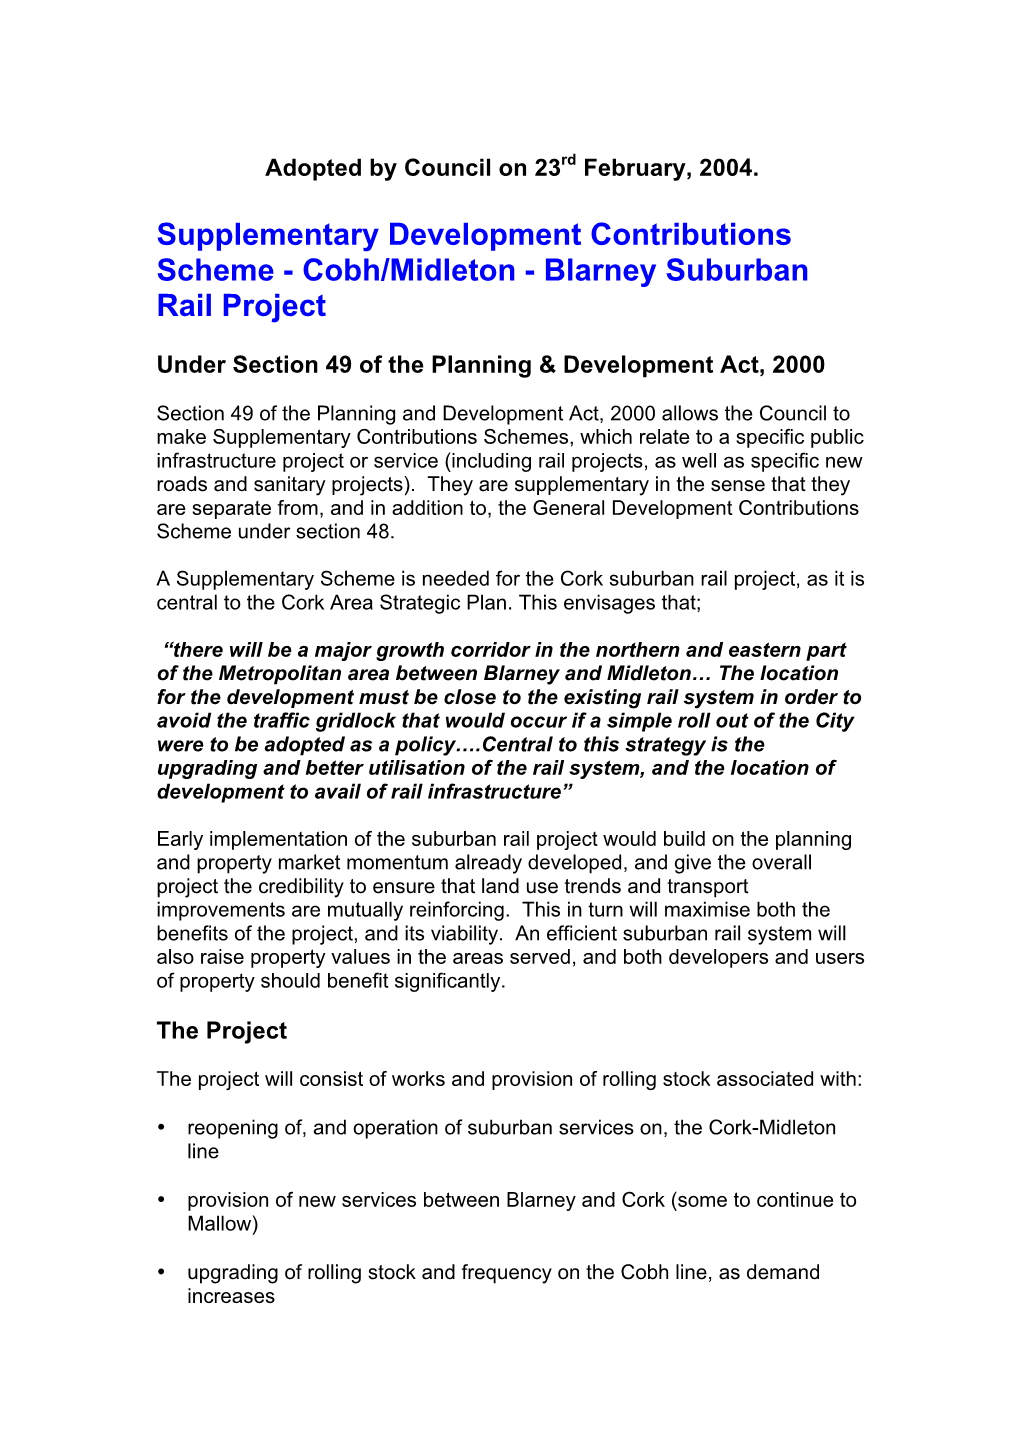 Supplementary Development Contributions Scheme - Cobh/Midleton - Blarney Suburban Rail Project